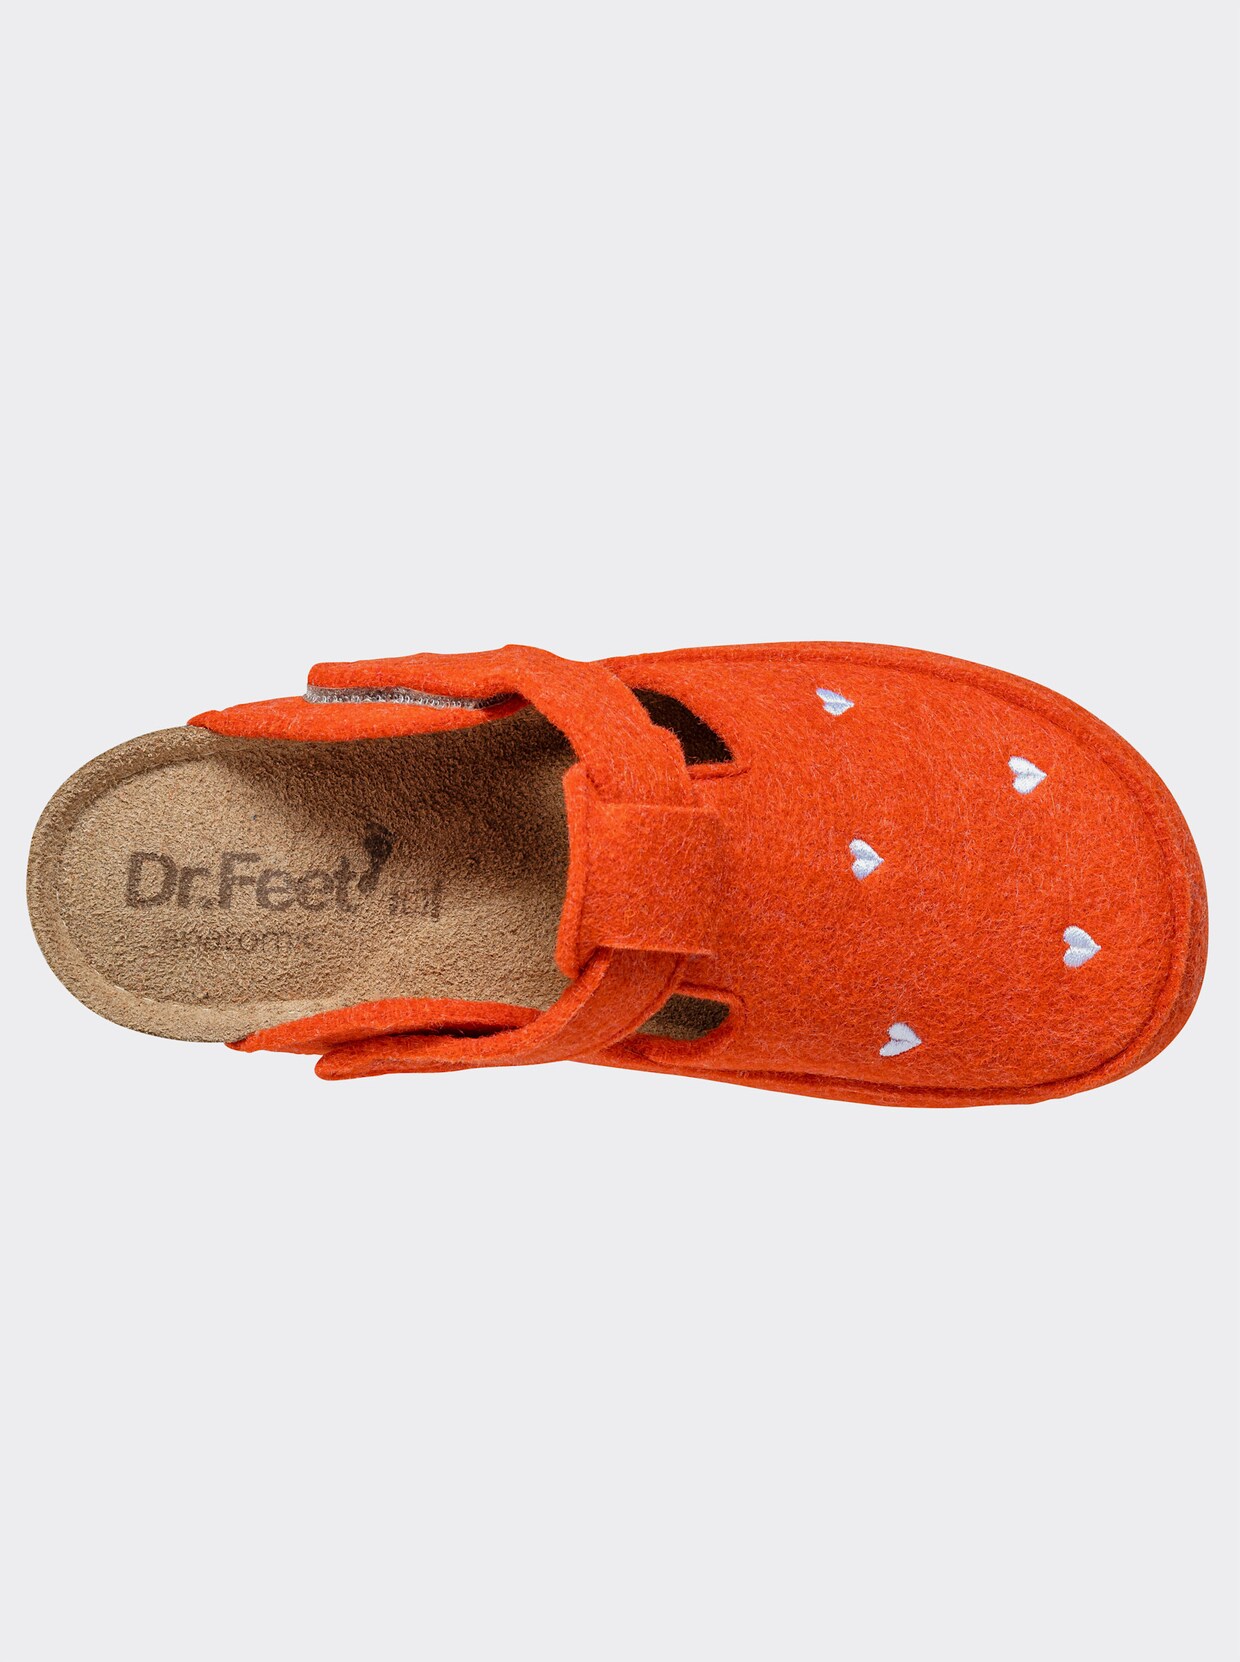 Dr. Feet Hausschuh - orange